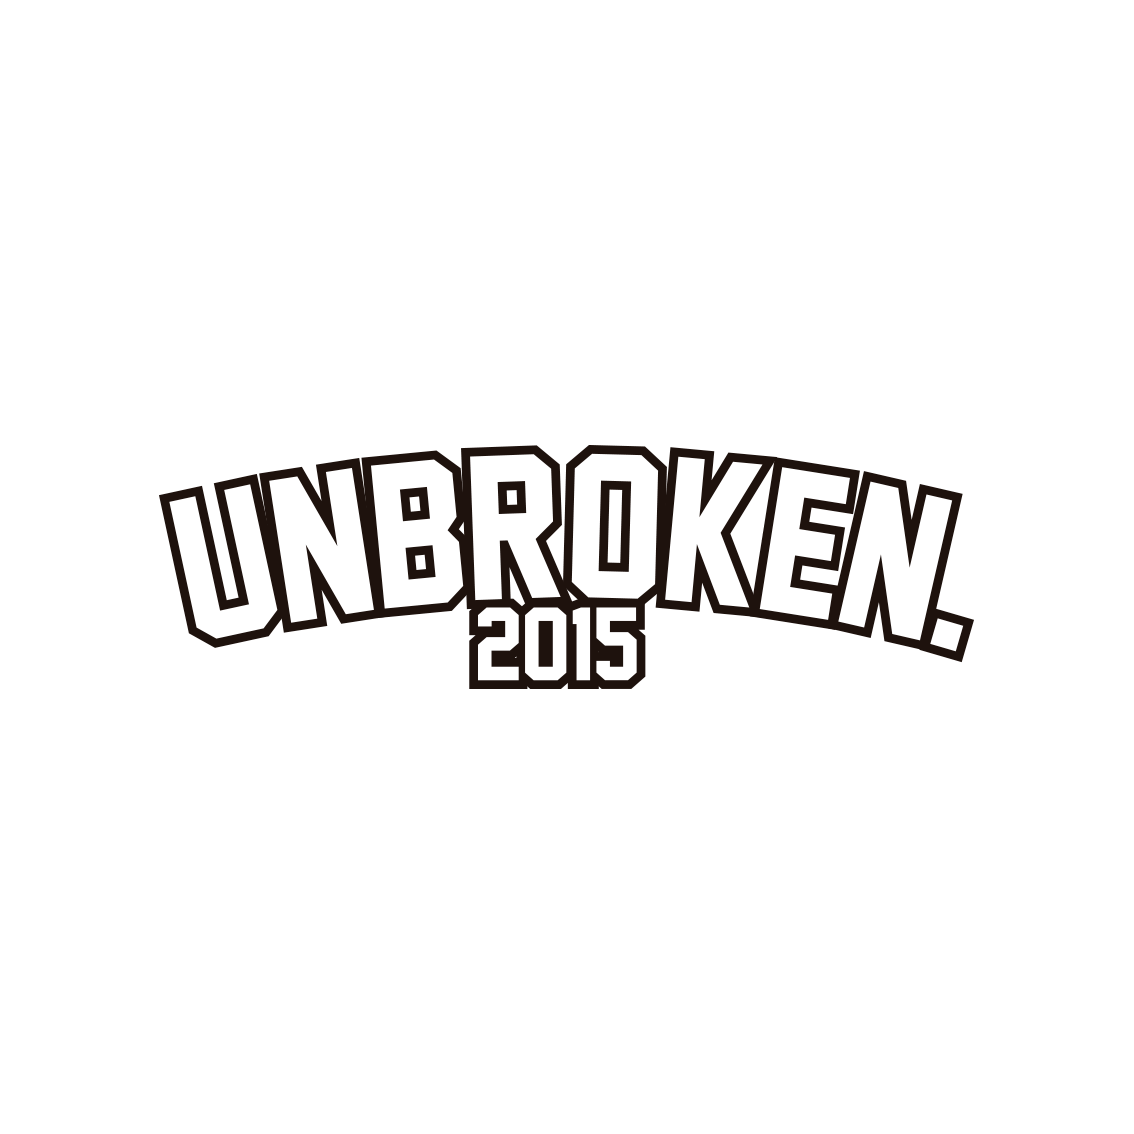 Sticker Unbroken 2015 coleccionable - Unbroken Sports Wear 